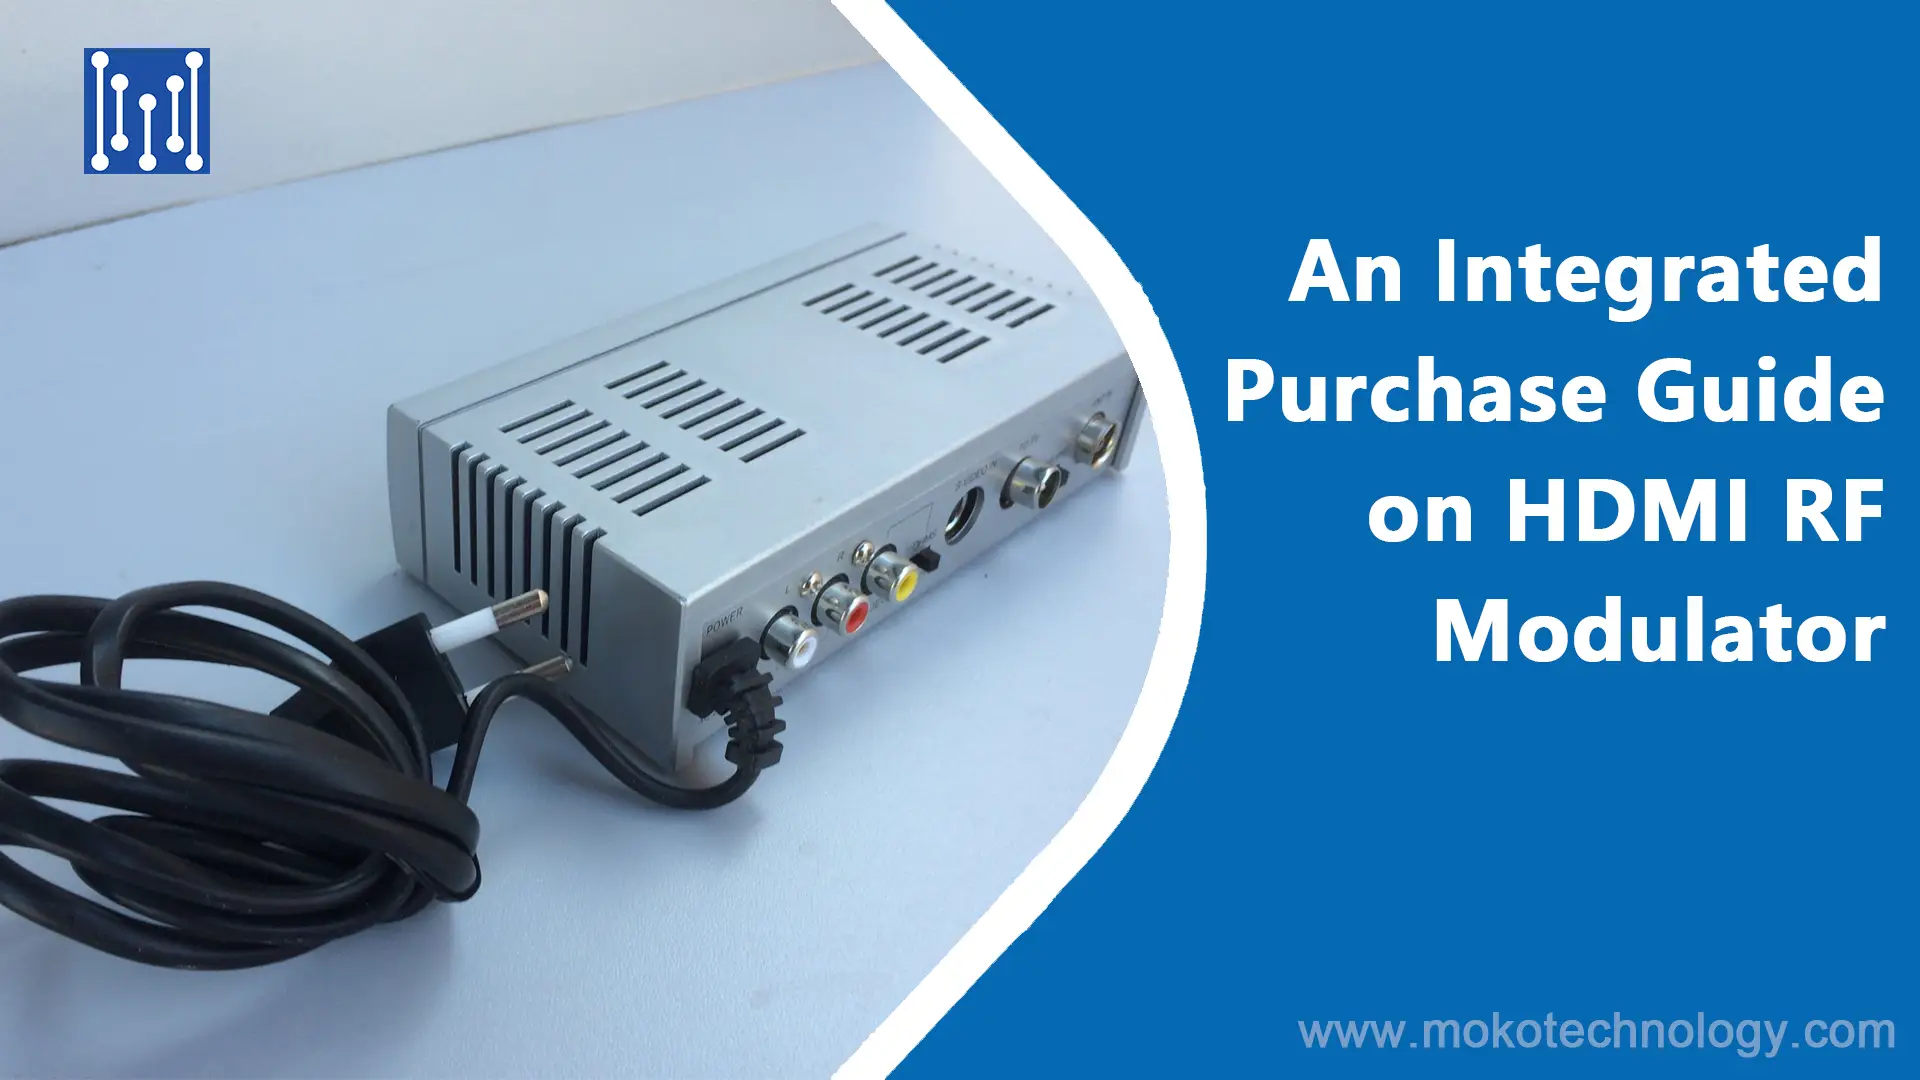 Una guía de compra integrada sobre el modulador HDMI RF